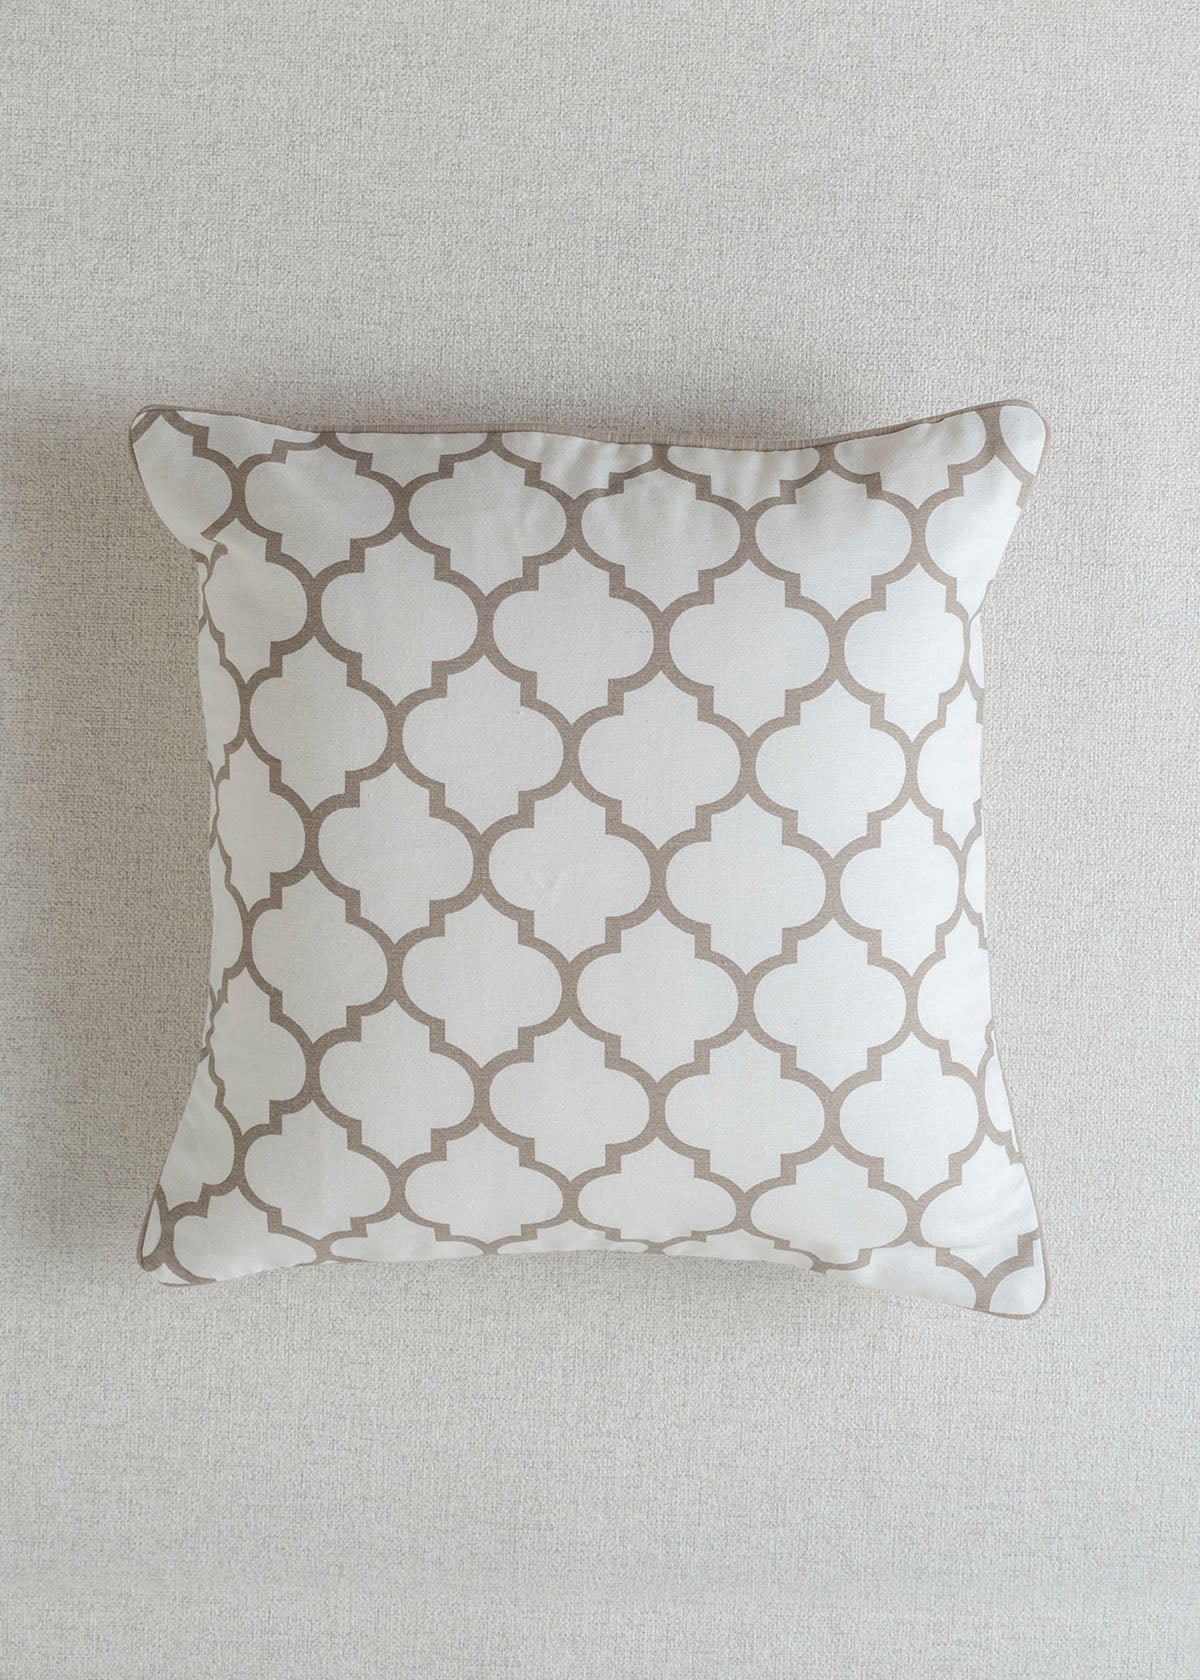 Trellis Printed Cotton Cushion Cover - Walnut-Grey